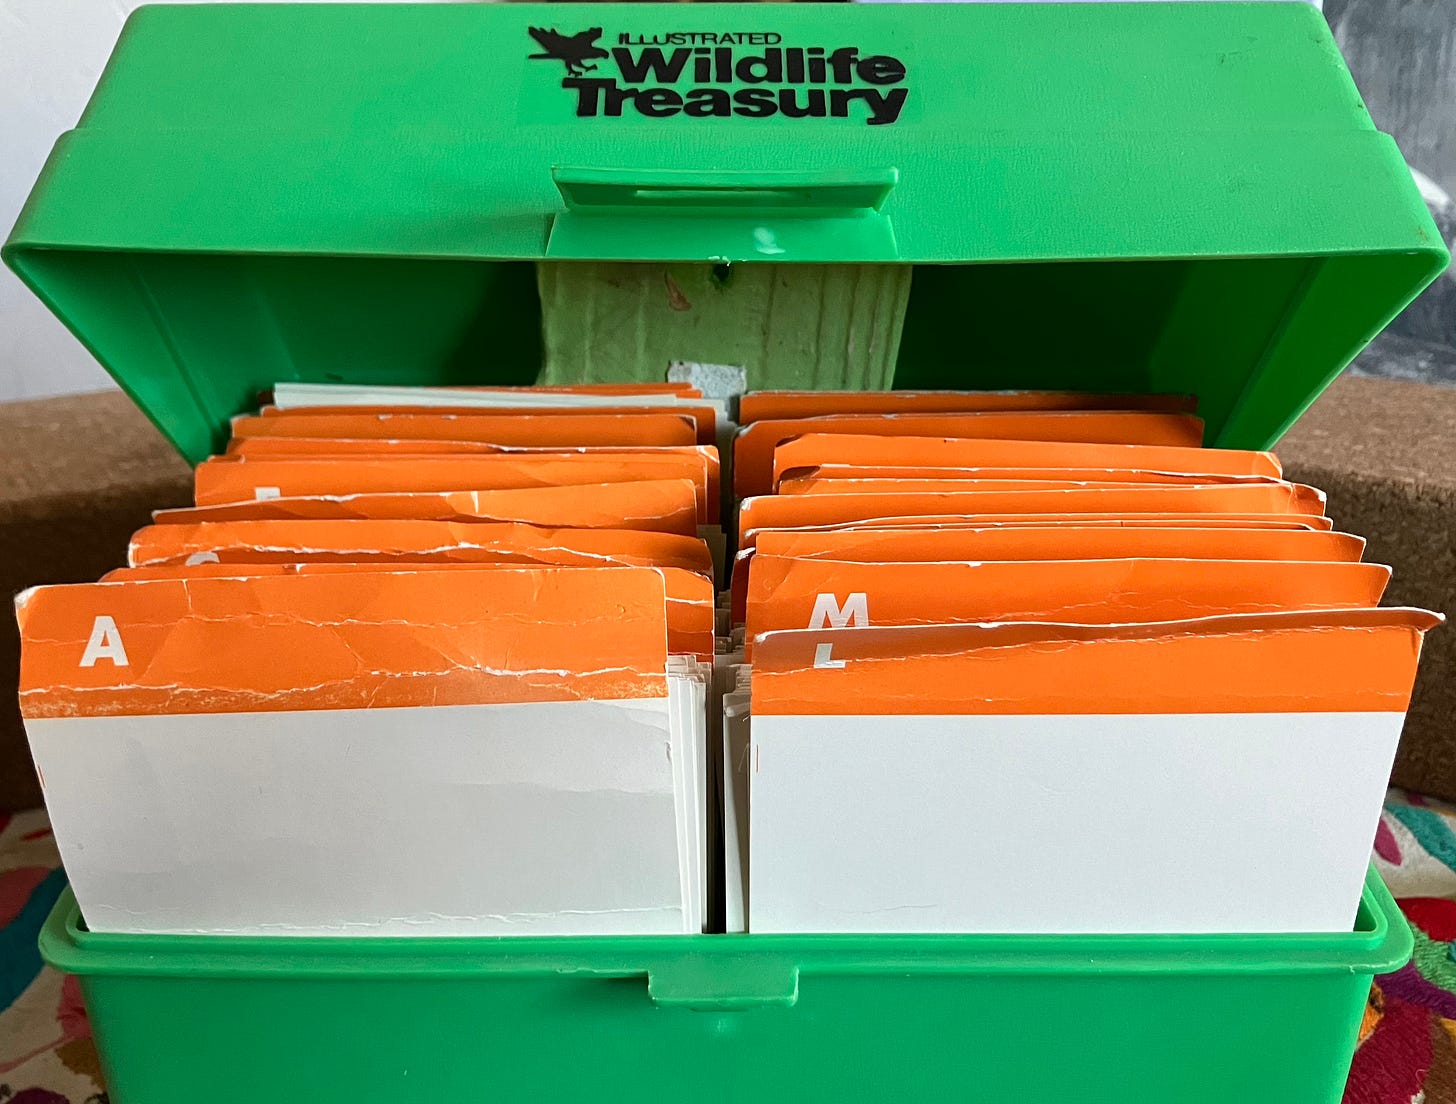 Green plastic box containing alphabetized wildlife cards